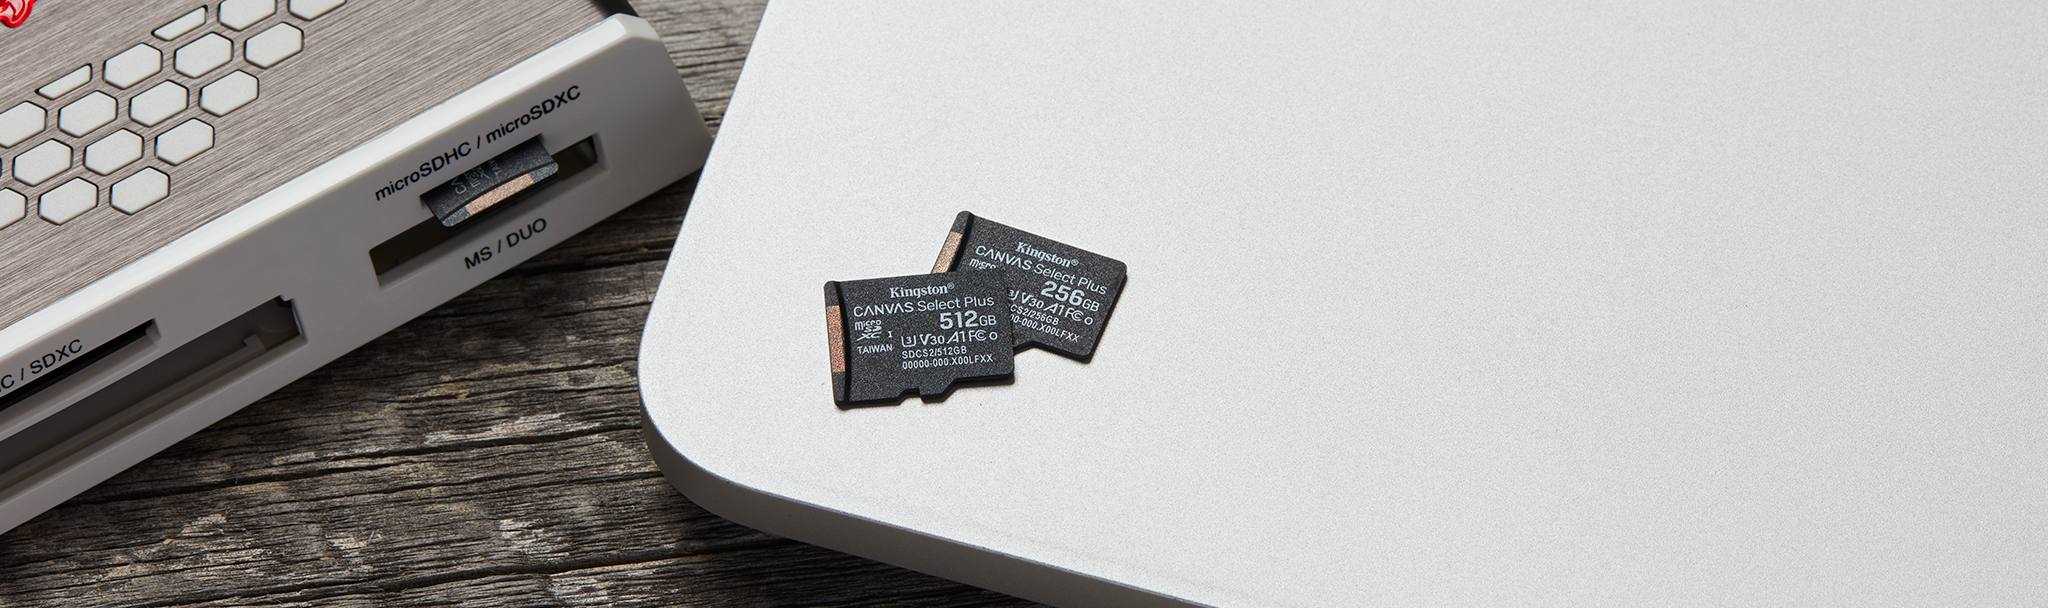 100MBs Works with Kingston Kingston 64GB HTC U12 Life MicroSDXC Canvas Select Plus Card Verified by SanFlash. 